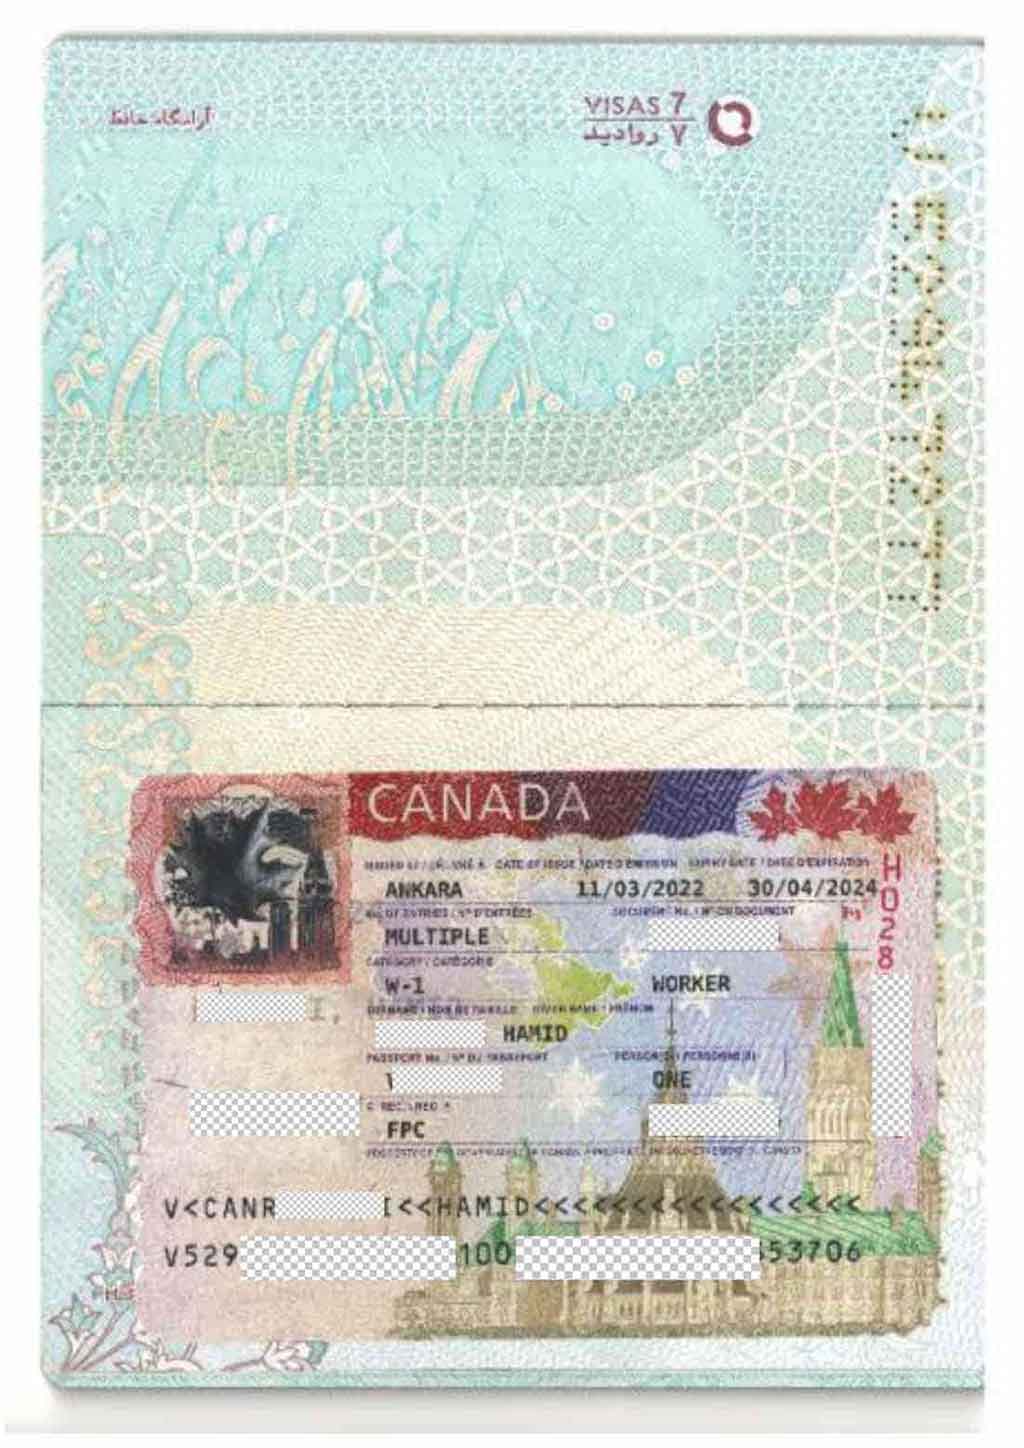 اخذ ویزای کار کانادا توسط رویال اپلای نمونه کار